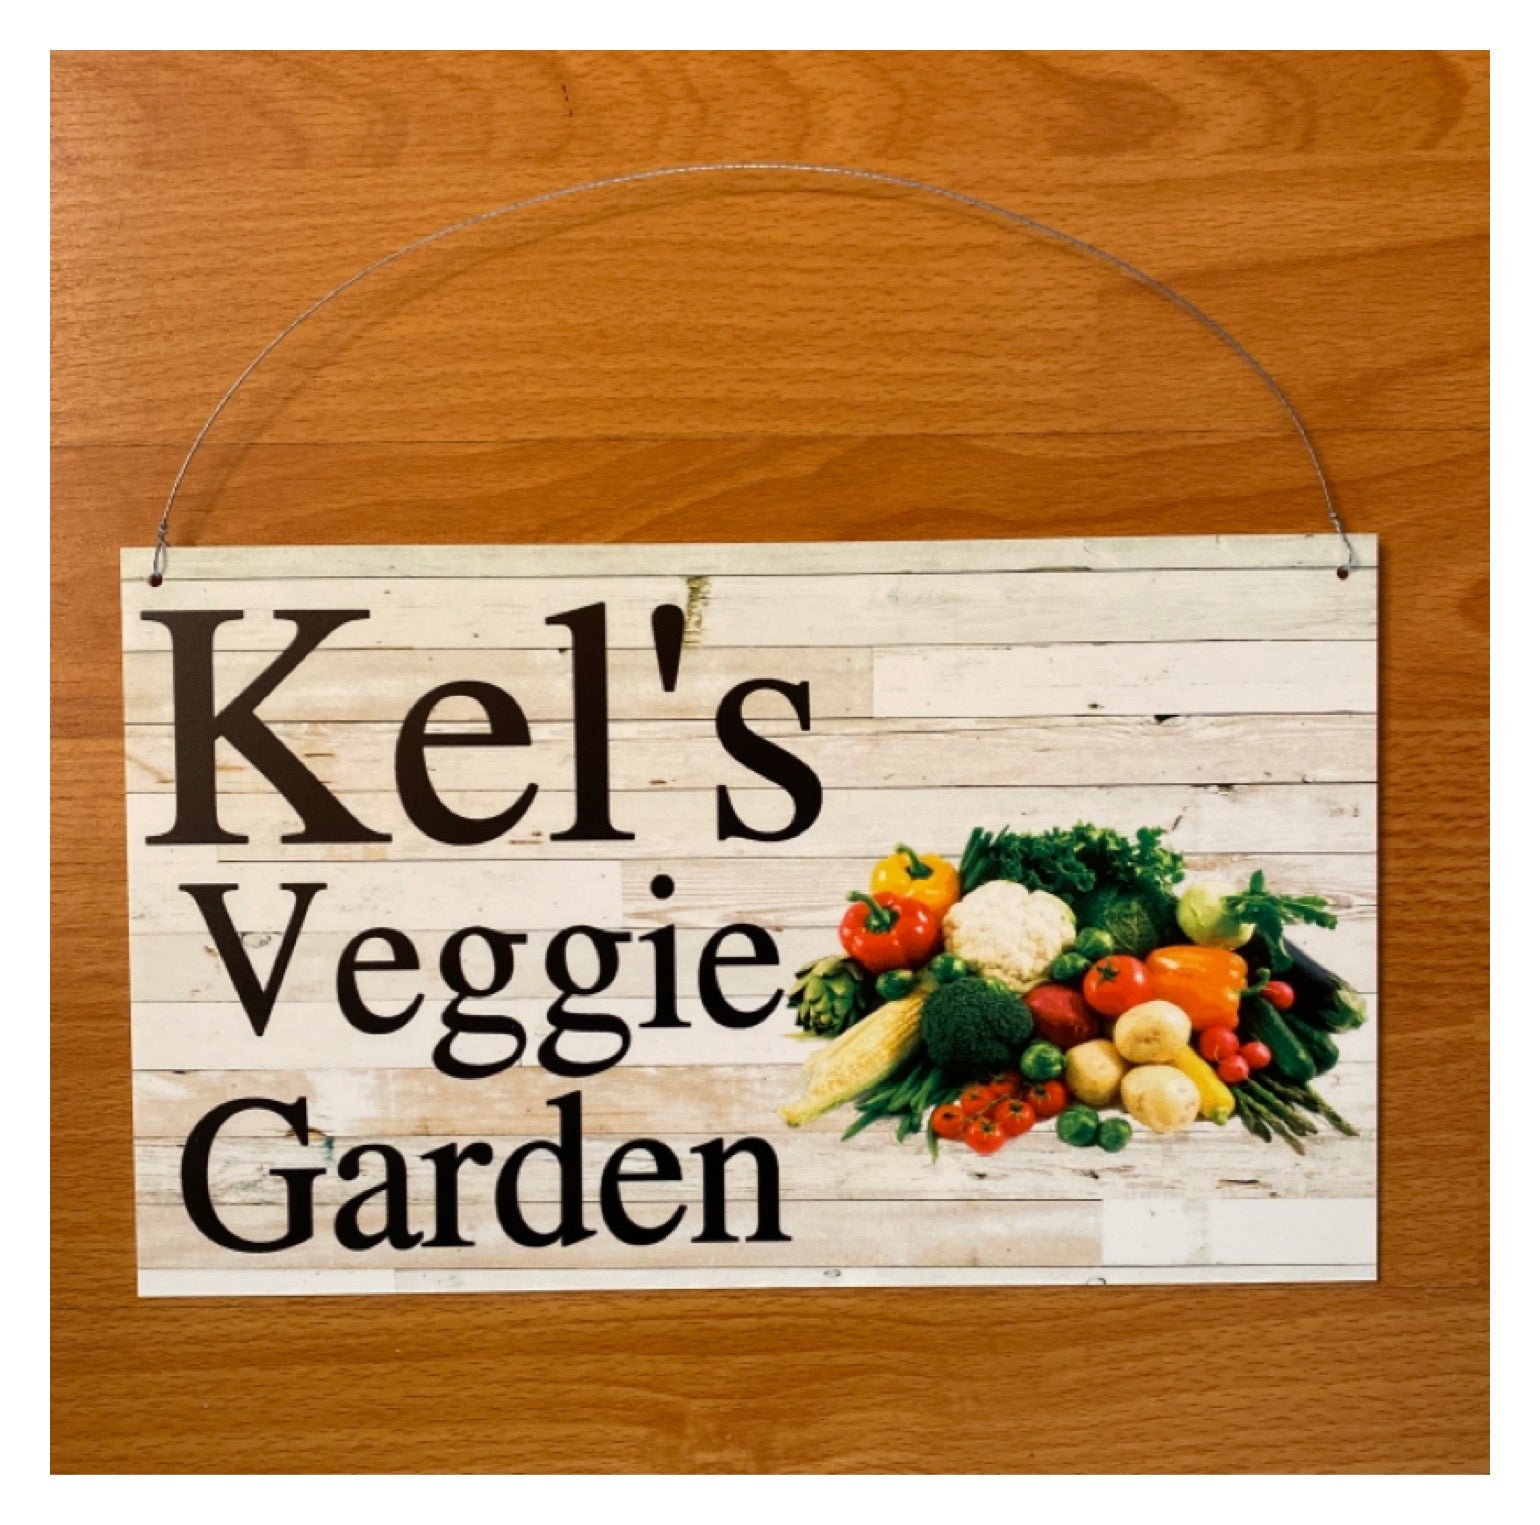 Vegetable Veggie Garden Custom Personalised Sign - The Renmy Store Homewares & Gifts 